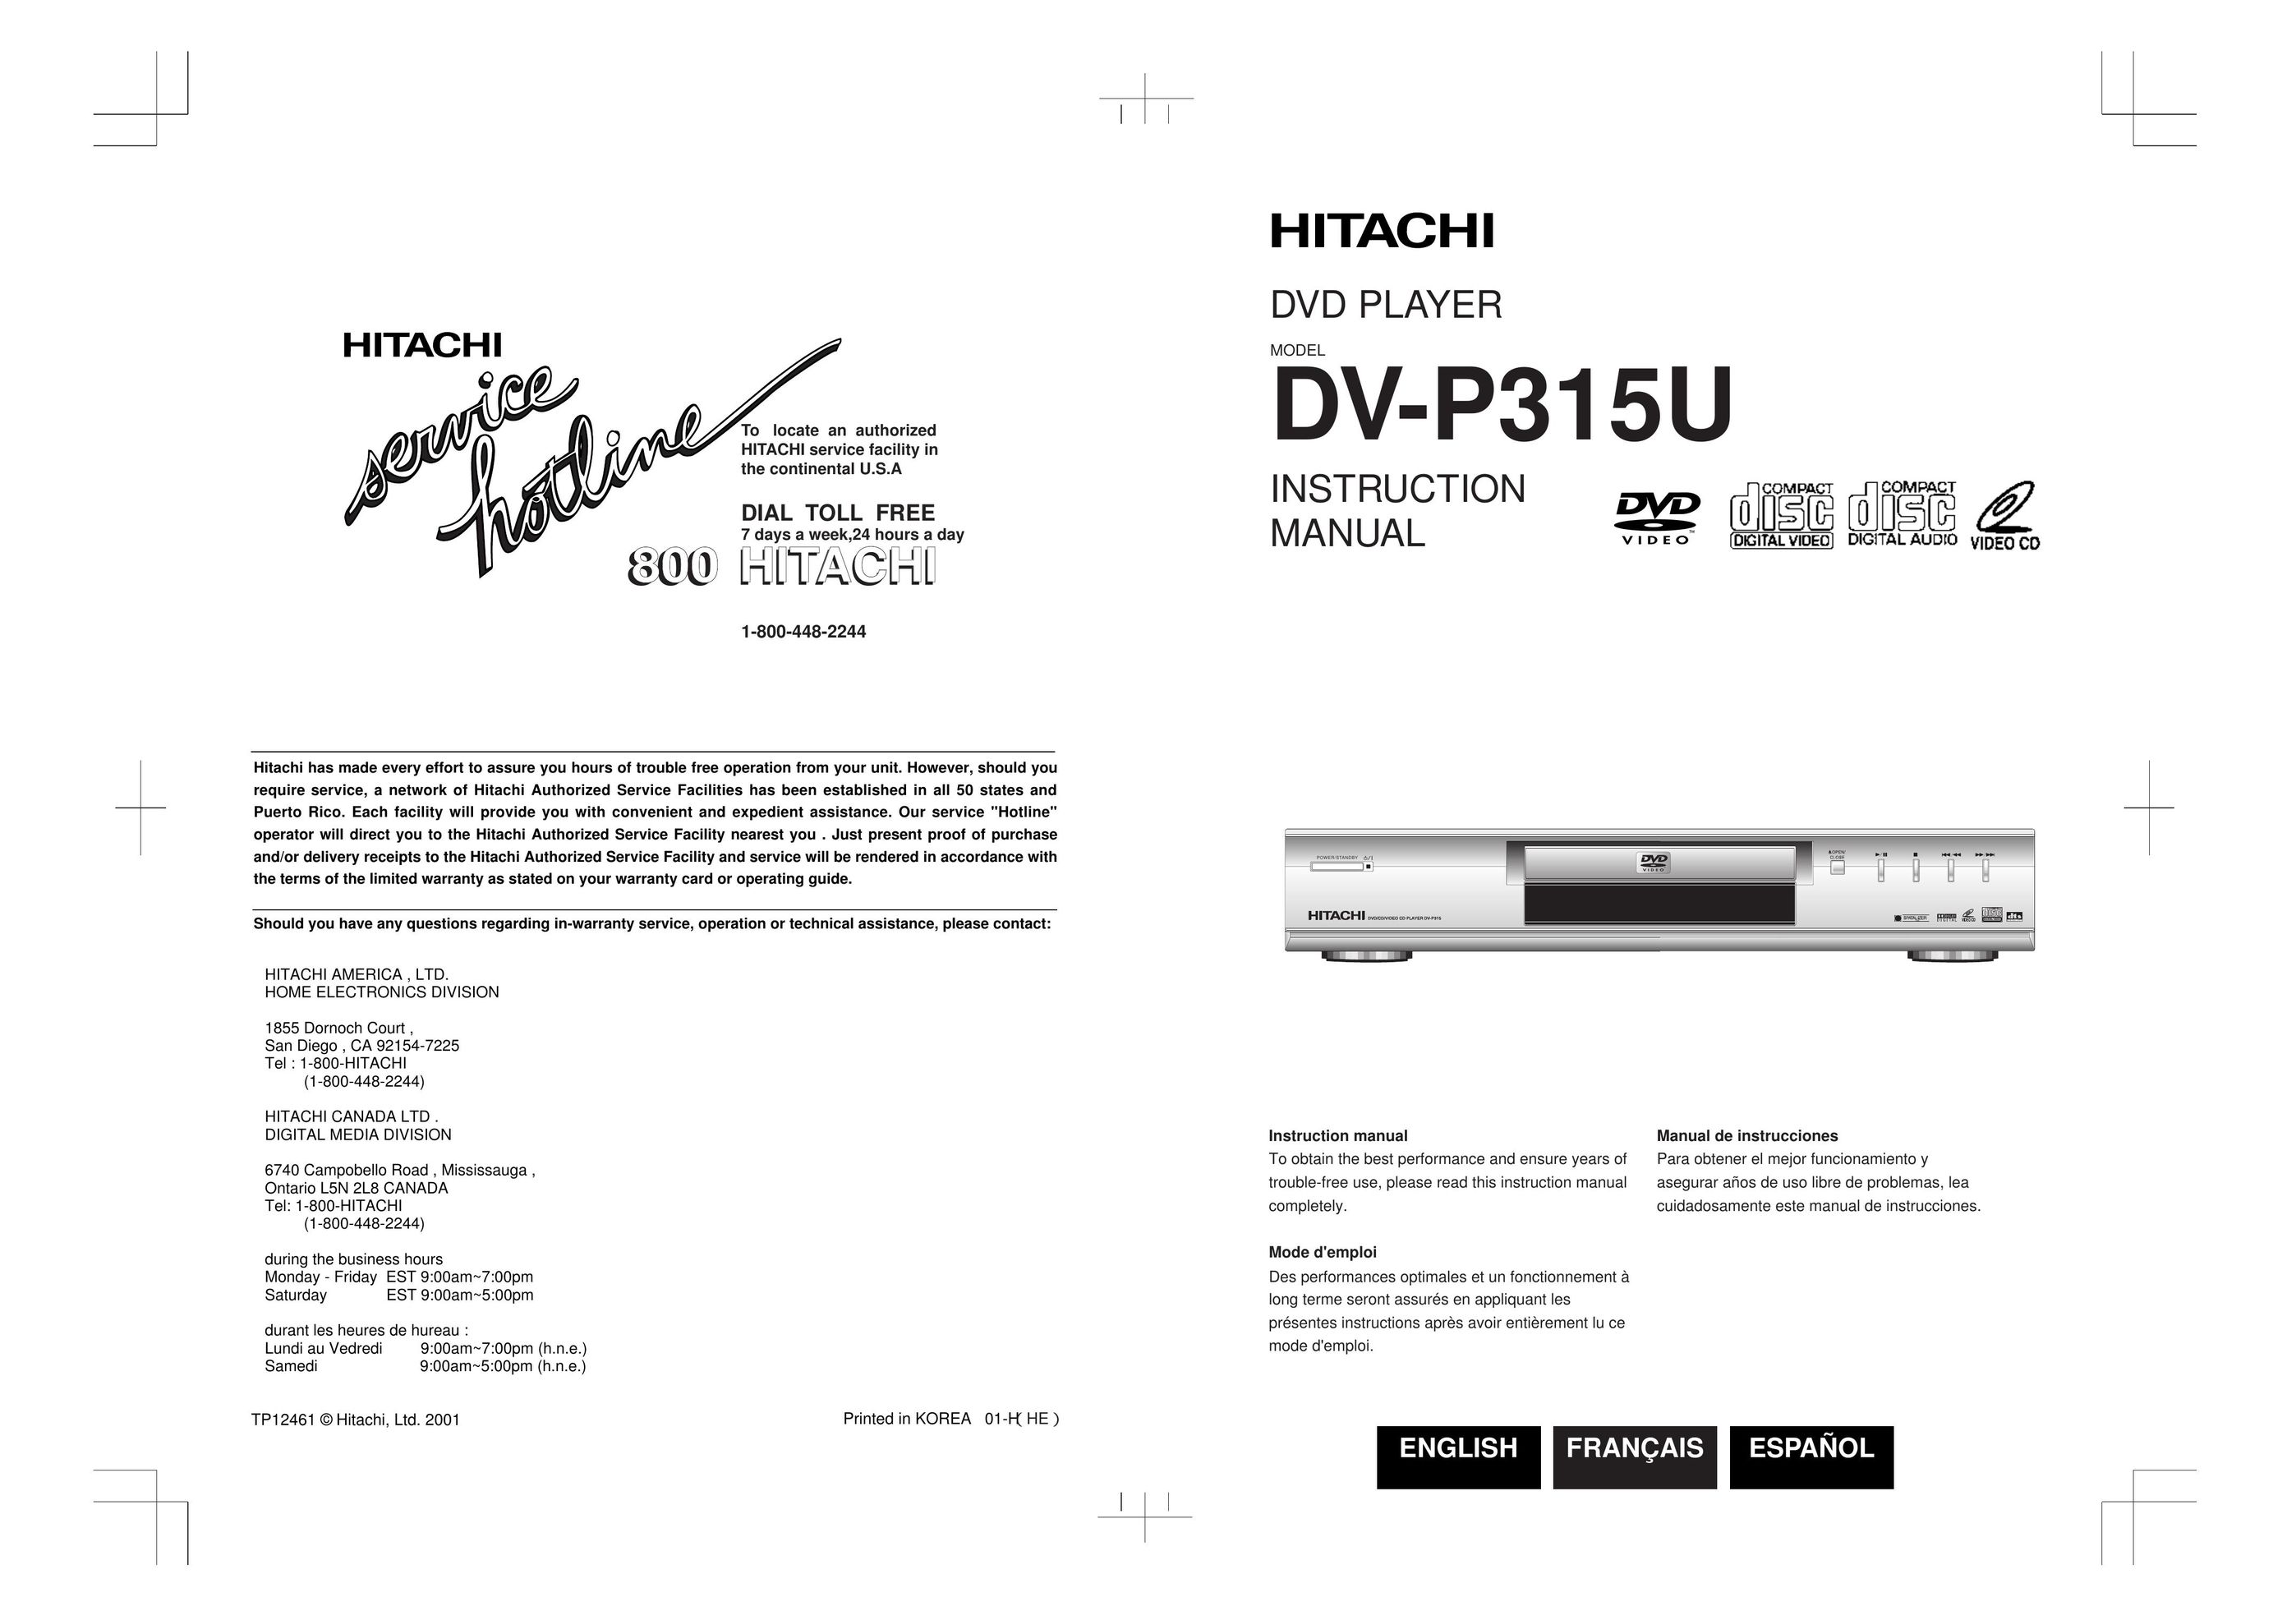 Hitachi DVP315U DVD Player User Manual